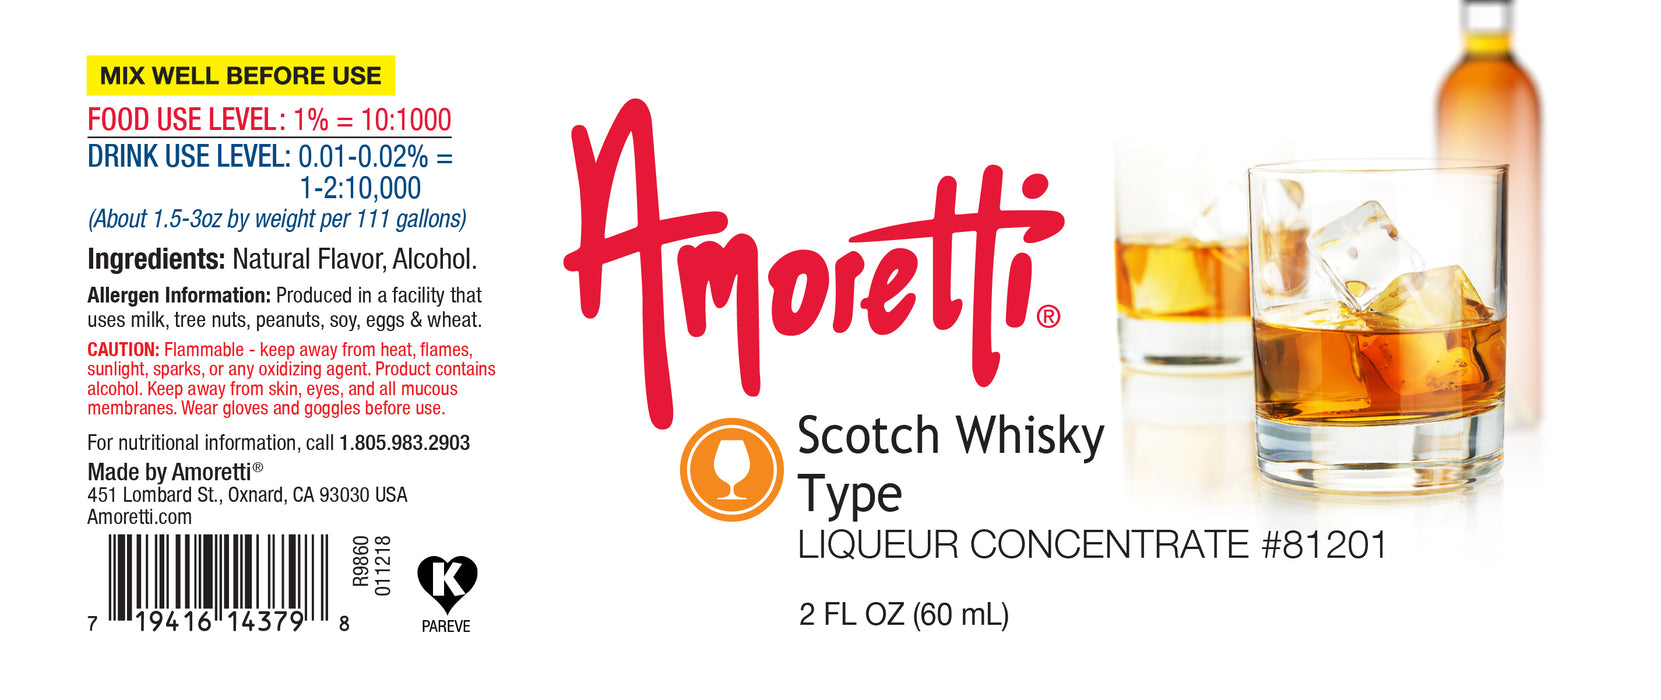 Scotch Whisky Type Liqueur Concentrate